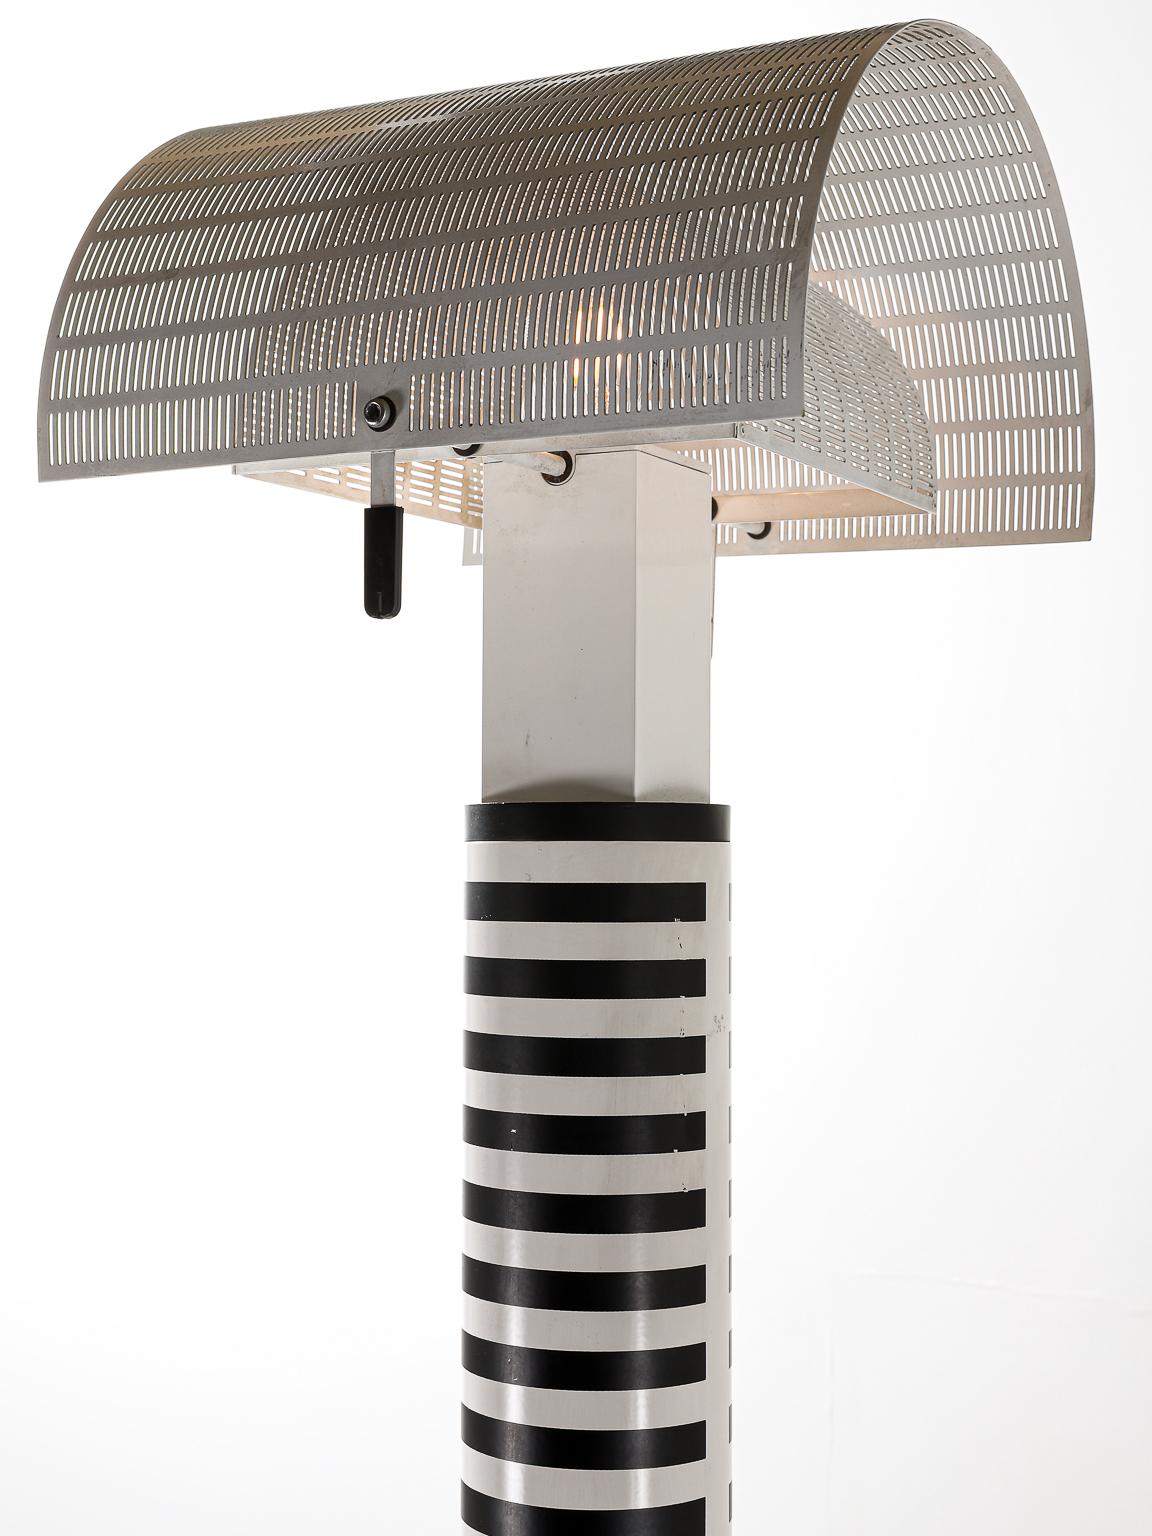 Artemide 'Shogun' 1980s Floor Lamp designed by Mario Botta 8